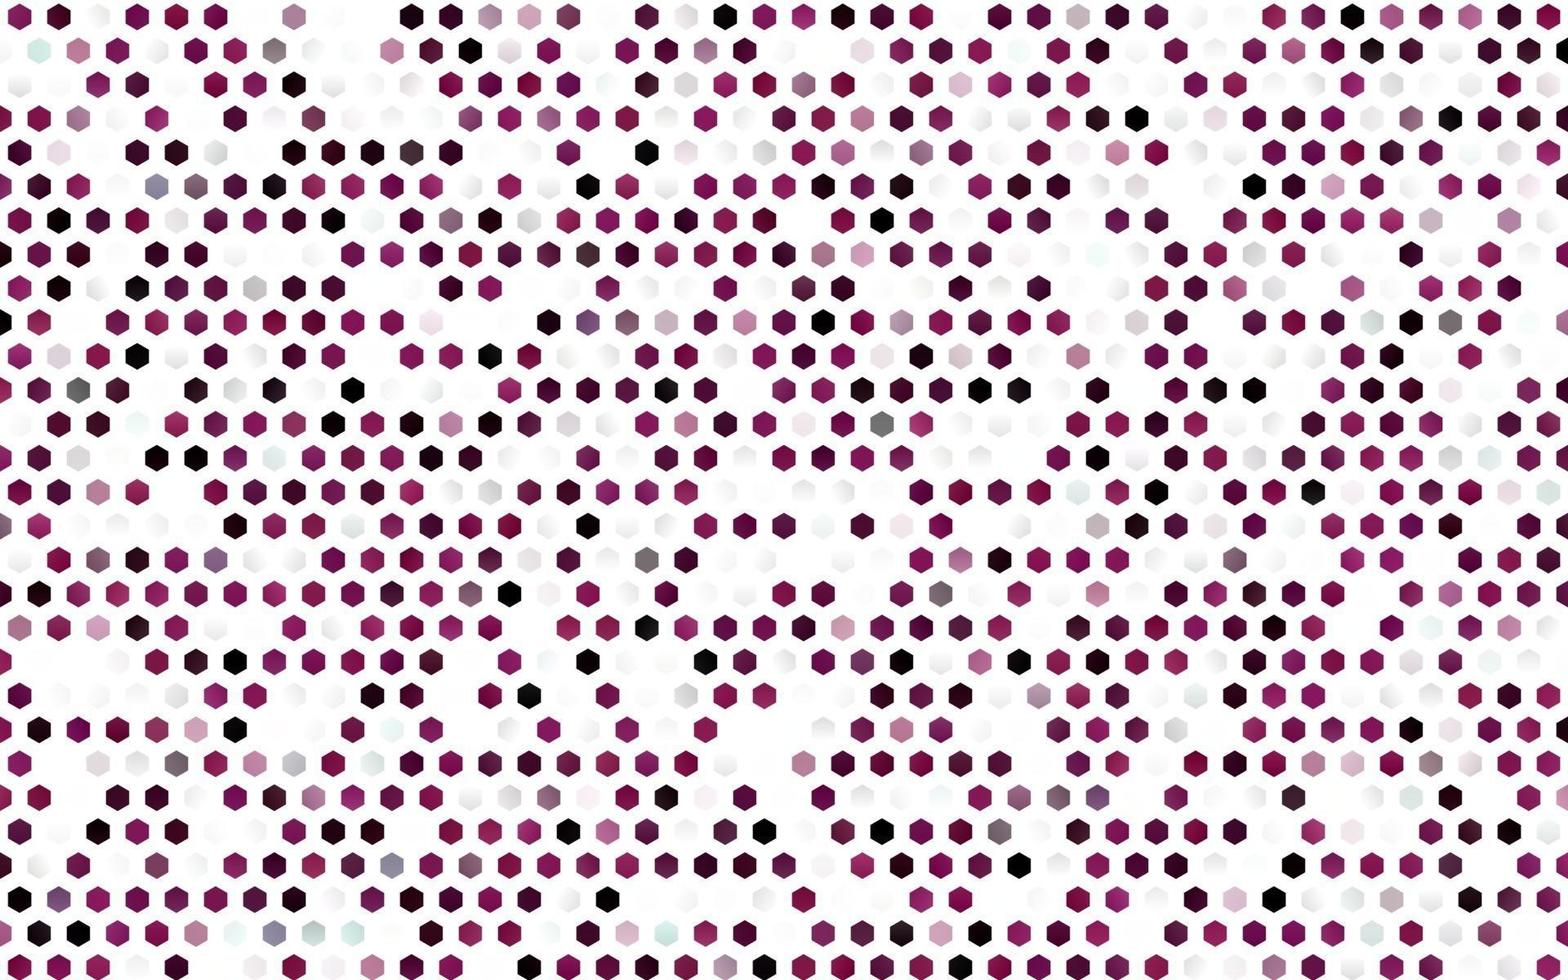 layout de vetor rosa escuro com formas hexagonais.